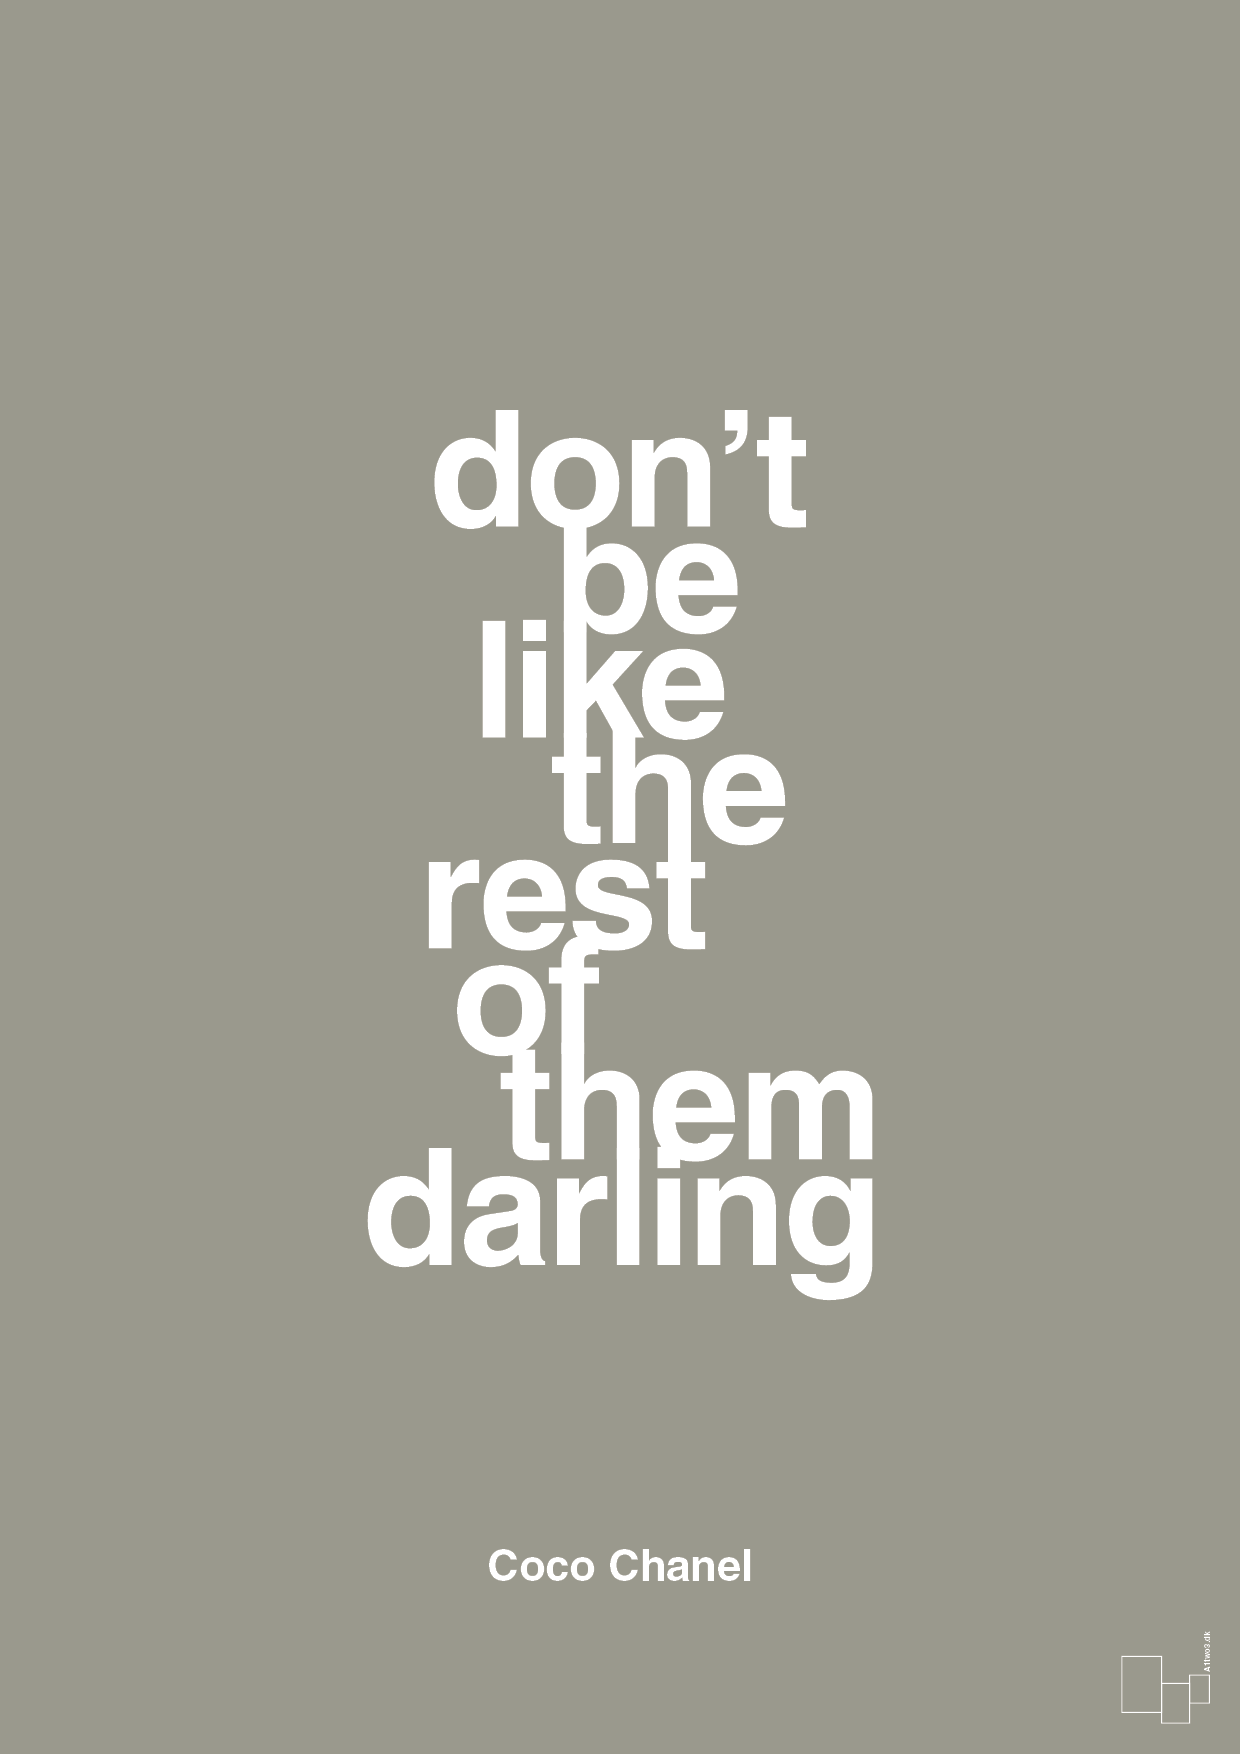 don’t be like the rest of them darling - Plakat med Citater i Battleship Gray